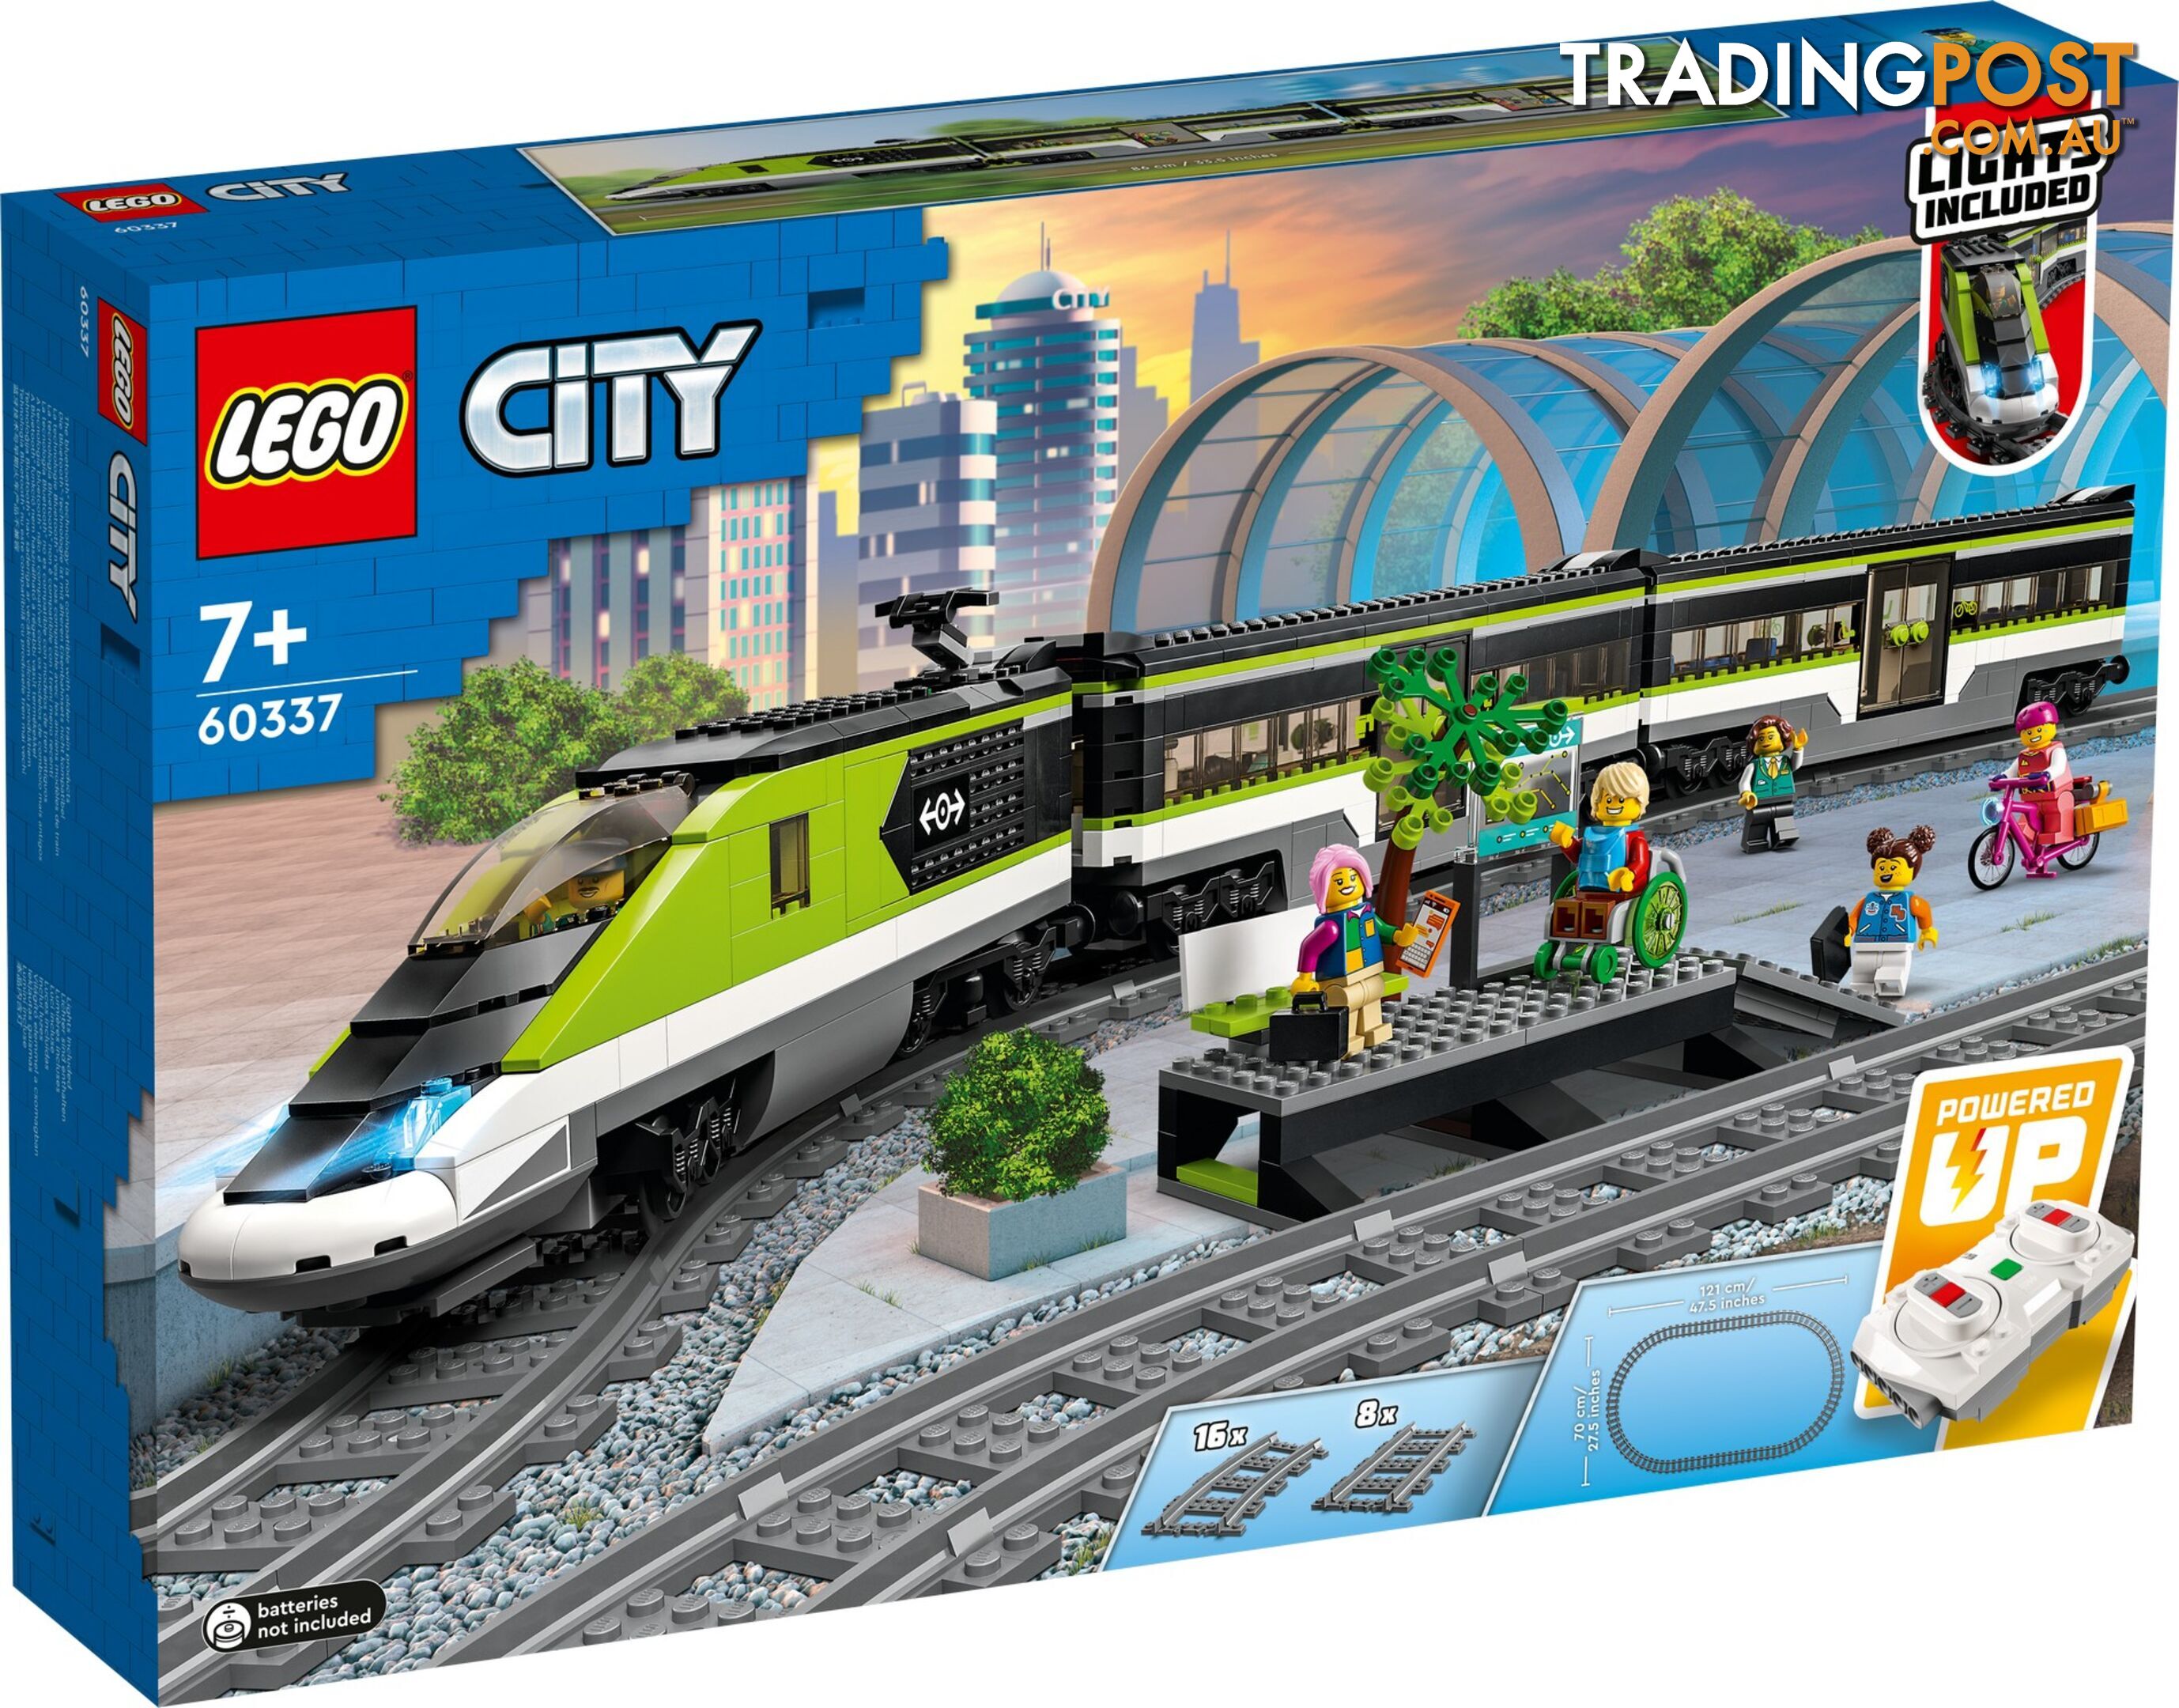 LEGO 60337 Express Passenger Train - City - 5702017162126